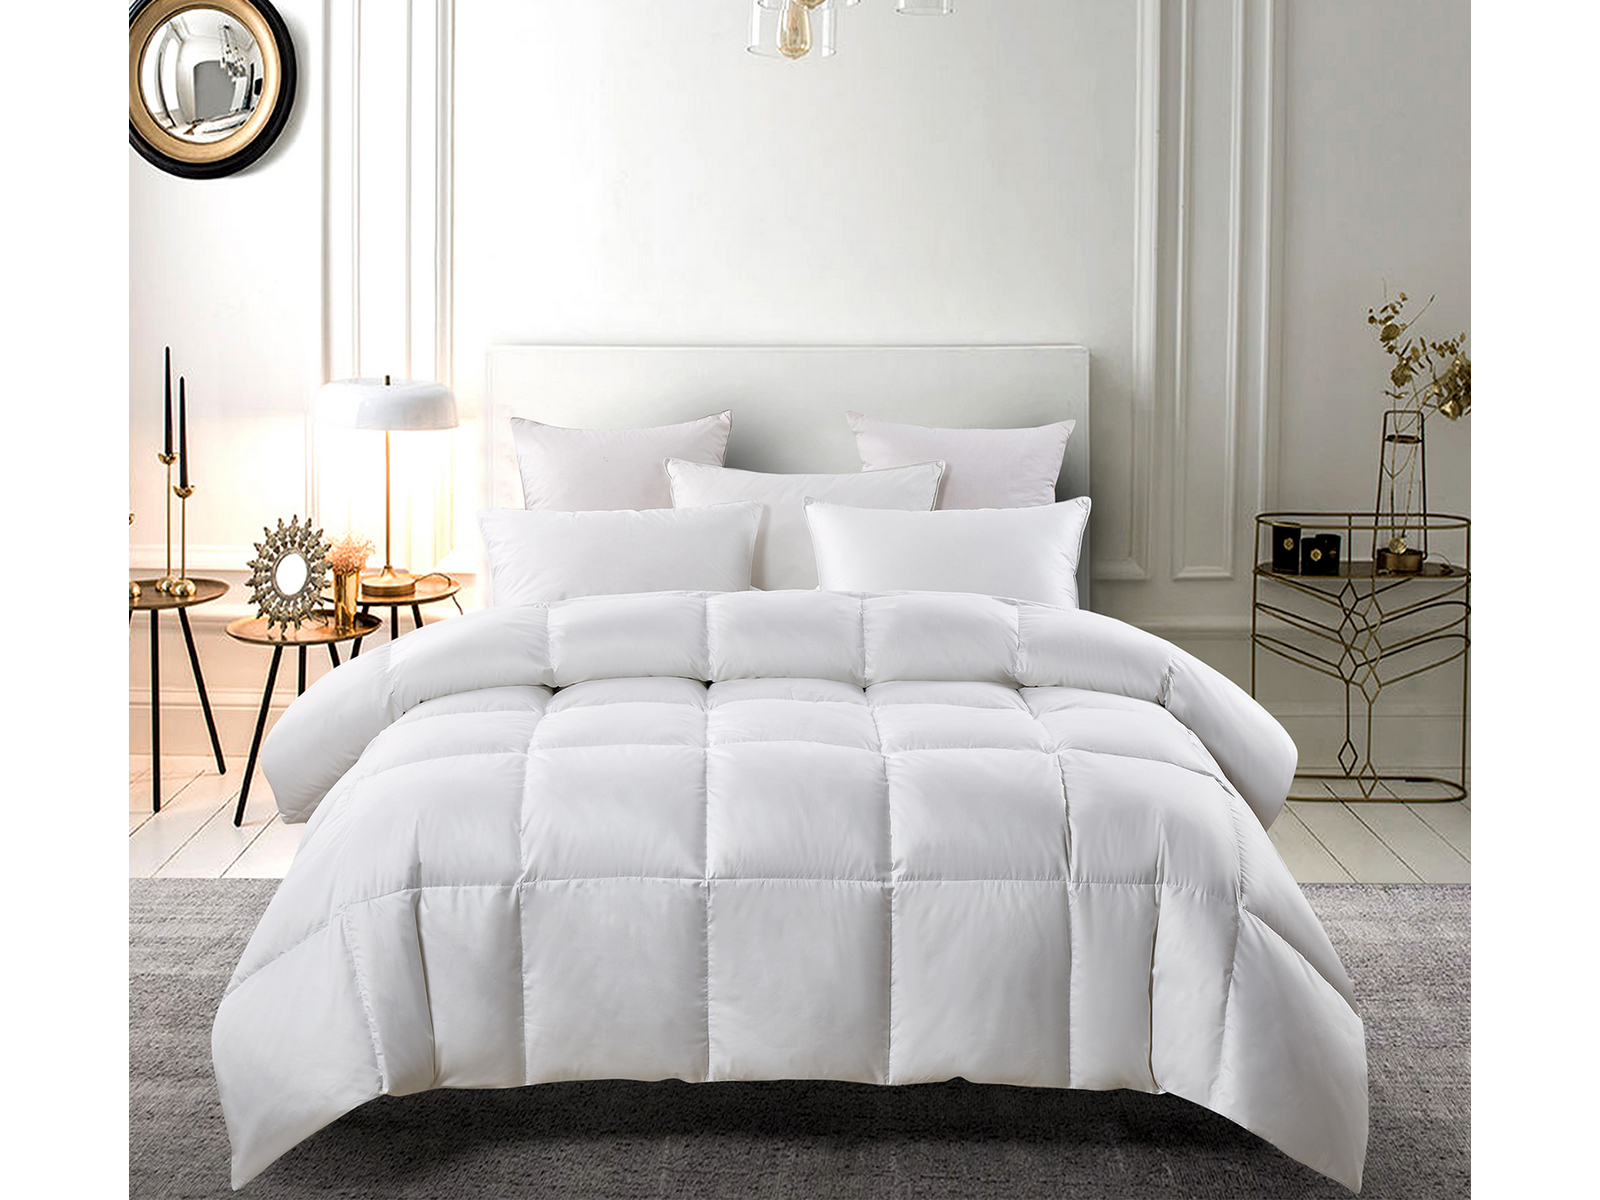 Serta King Perfect Sleeper Light Warmth Down Fiber Comforter